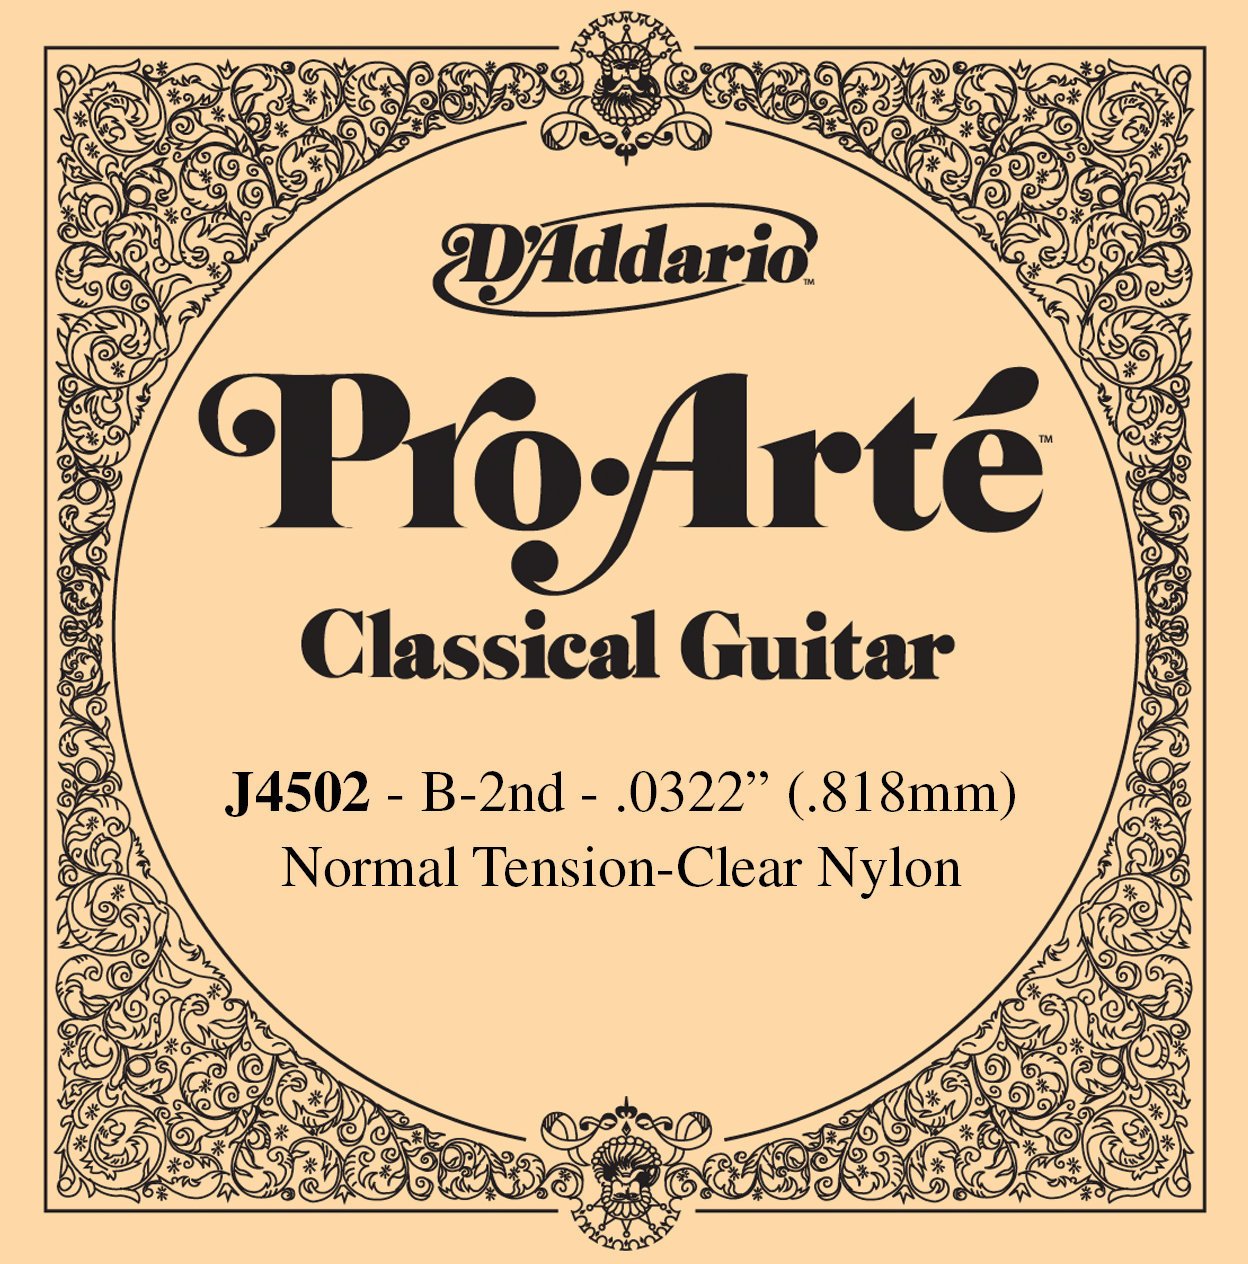 Különálló klasszikus gitárhúr D'Addario J 4502 Különálló klasszikus gitárhúr